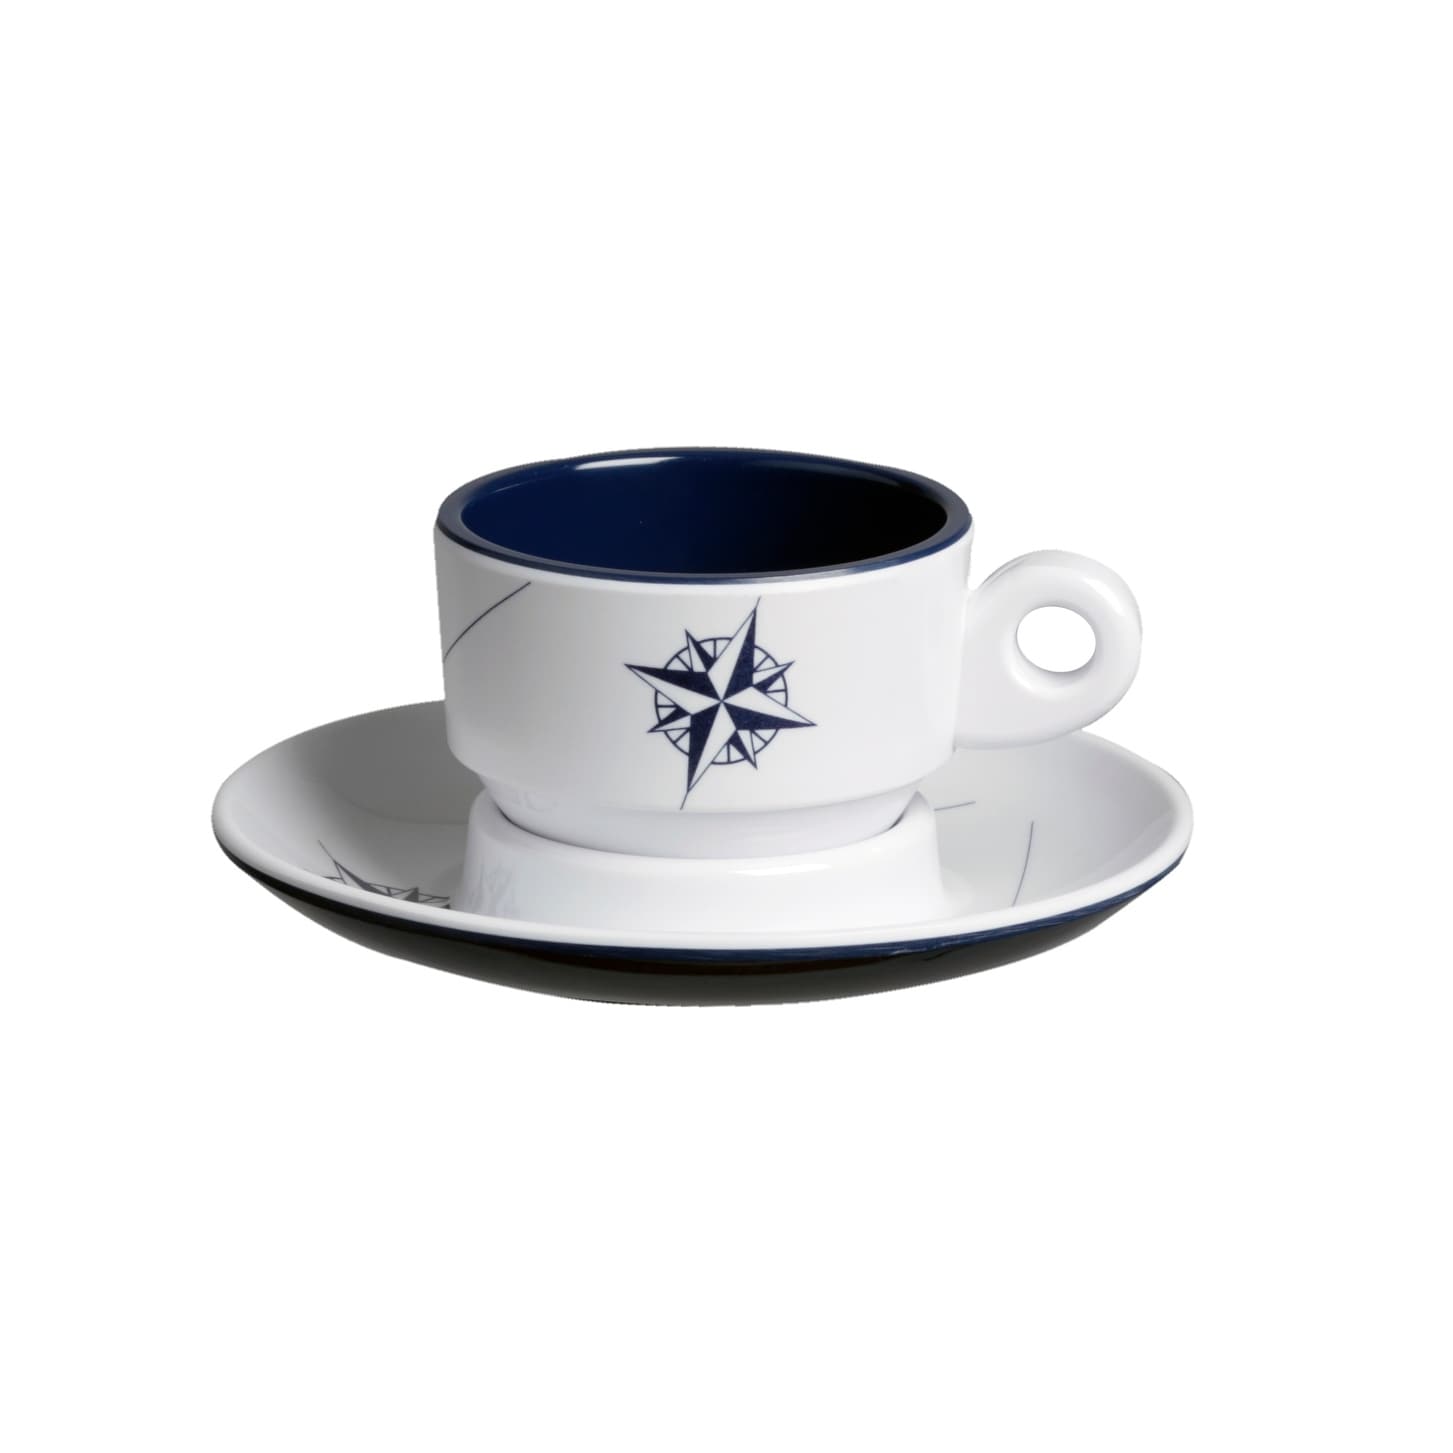 Royal Doulton Coffee Studio 4 oz. Mixed Colors Porcelain Espresso